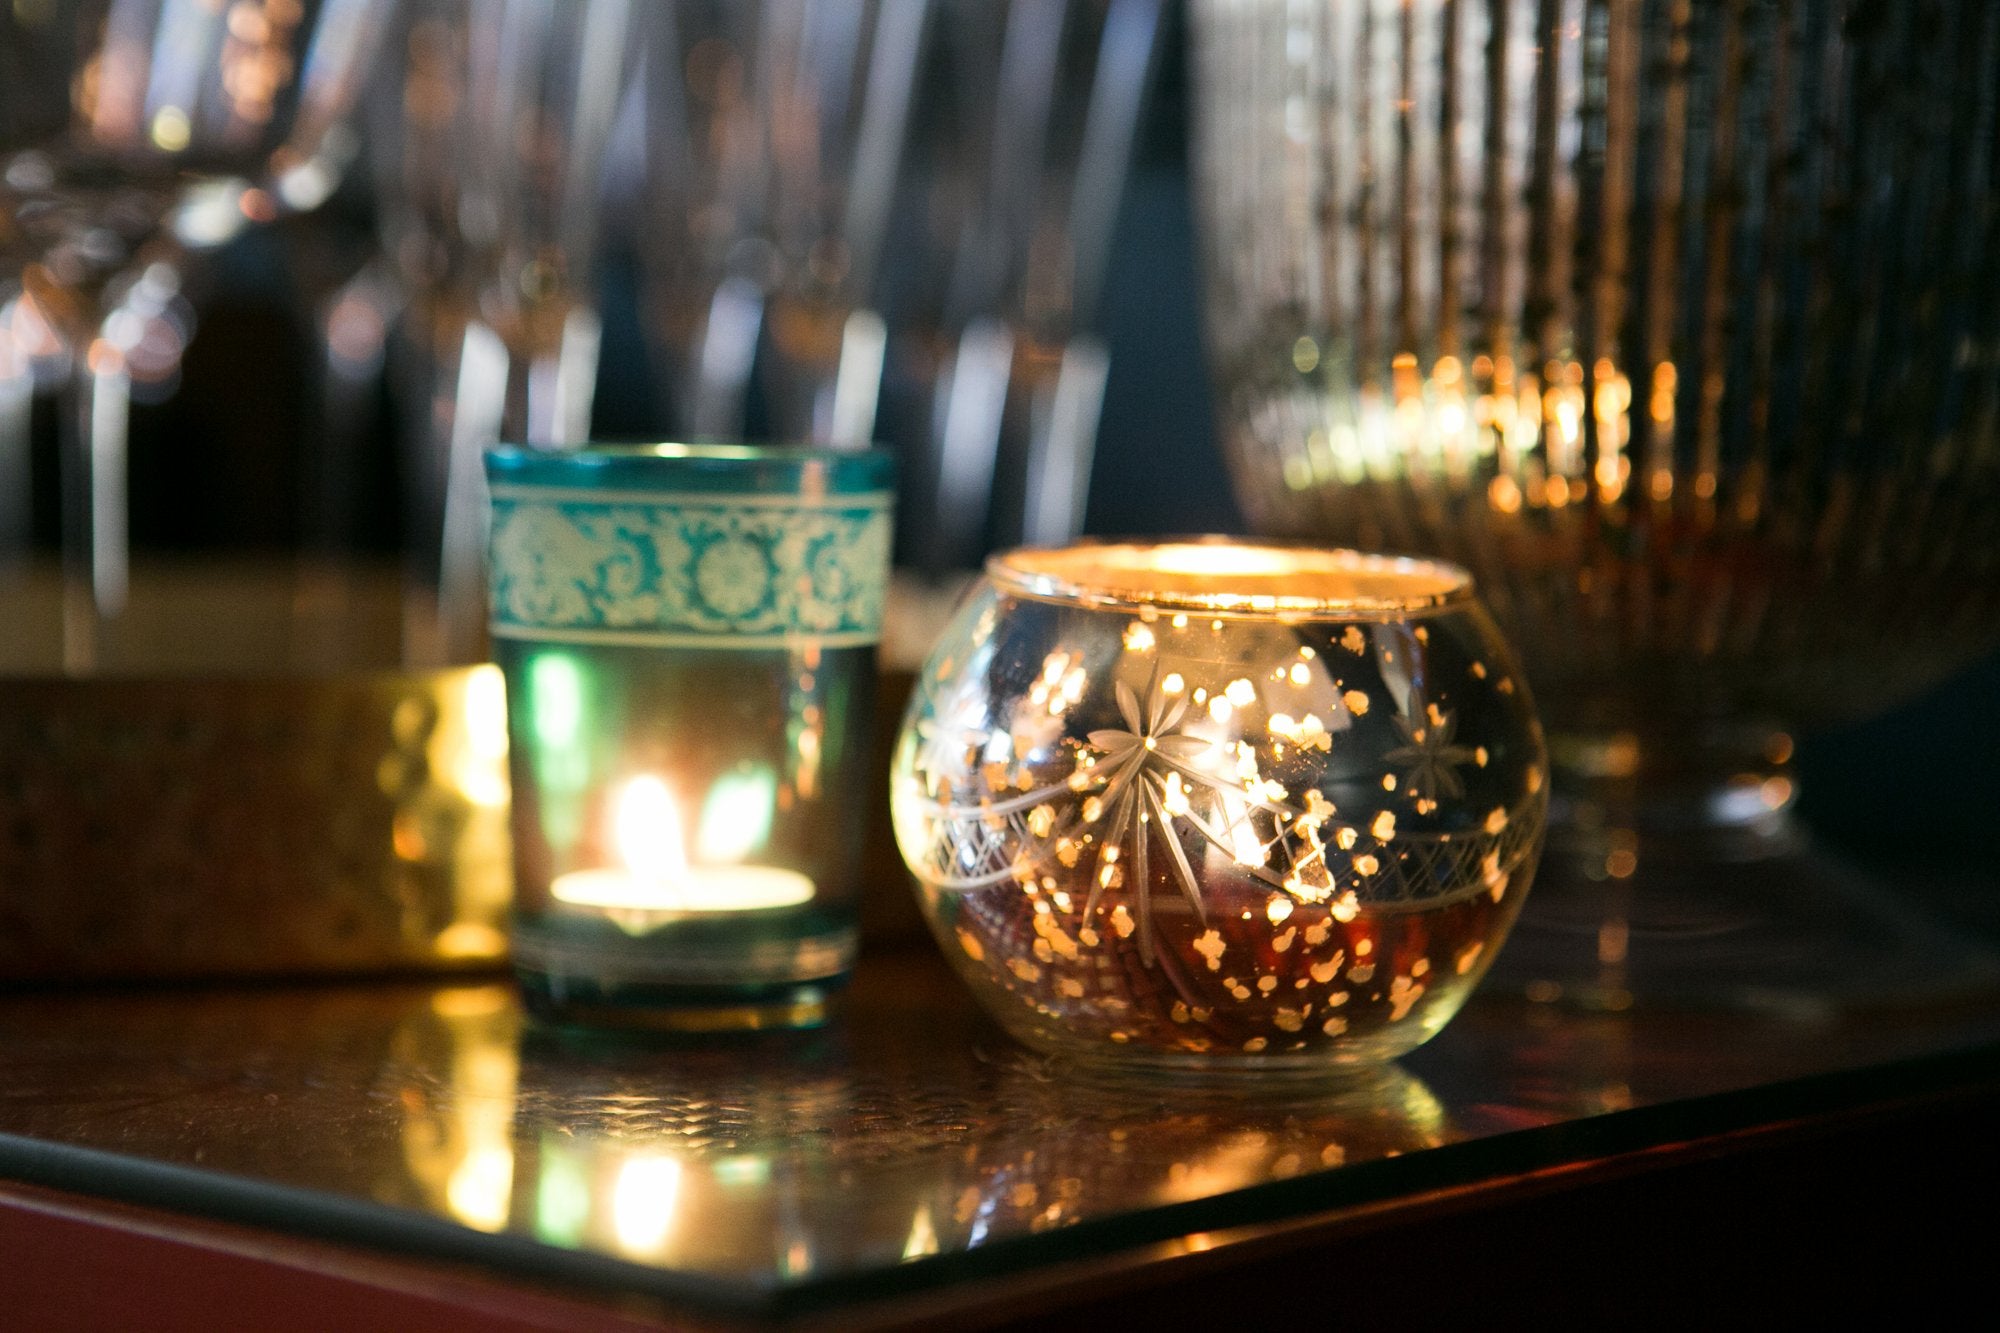 Mini Gold Mercury Glass Lanterns - Set of 4, Warm White LED Lights, 4